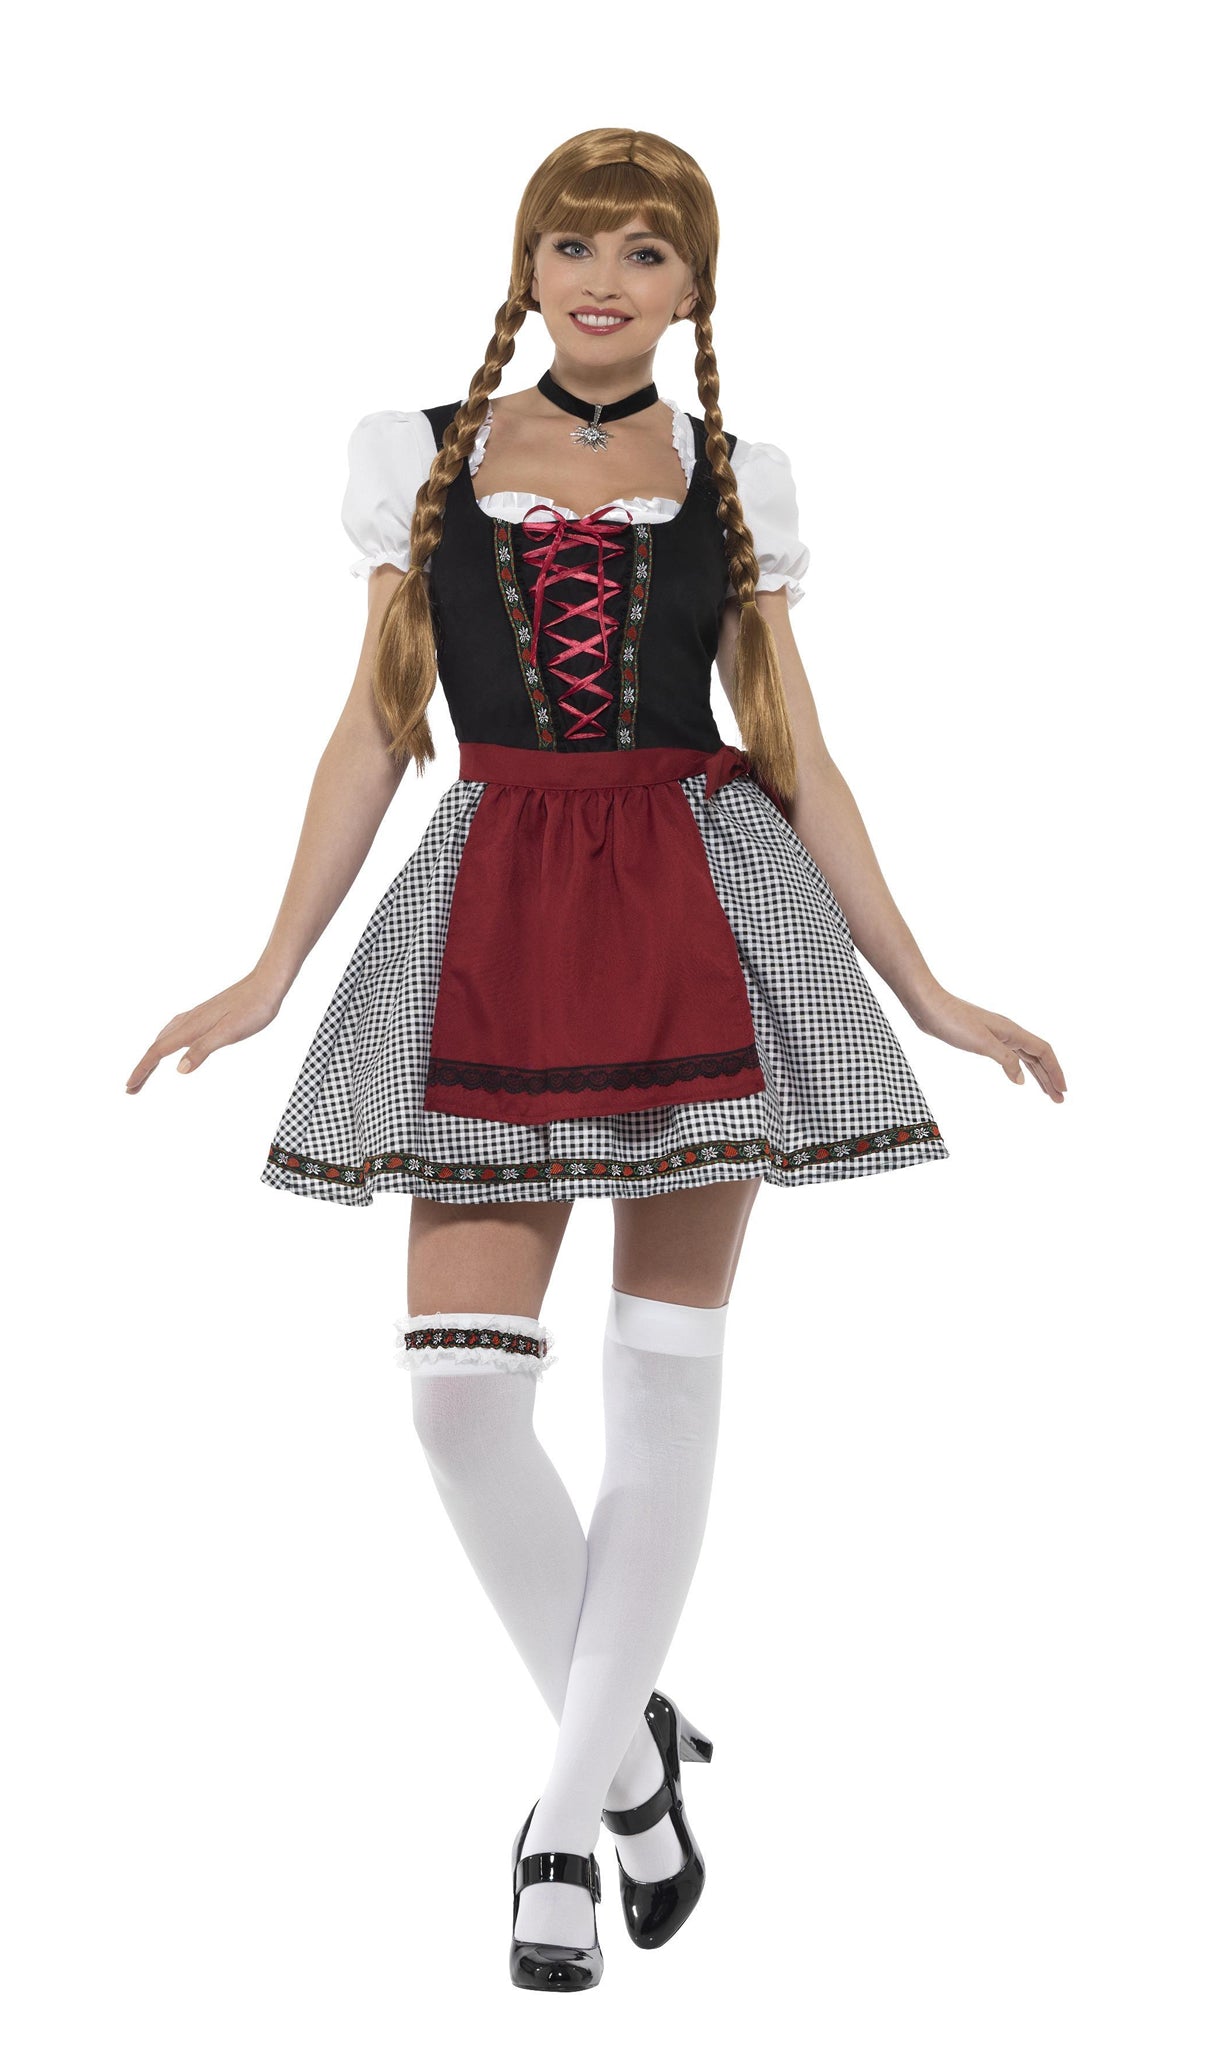 Buy Flirty Bavarian Fraulein